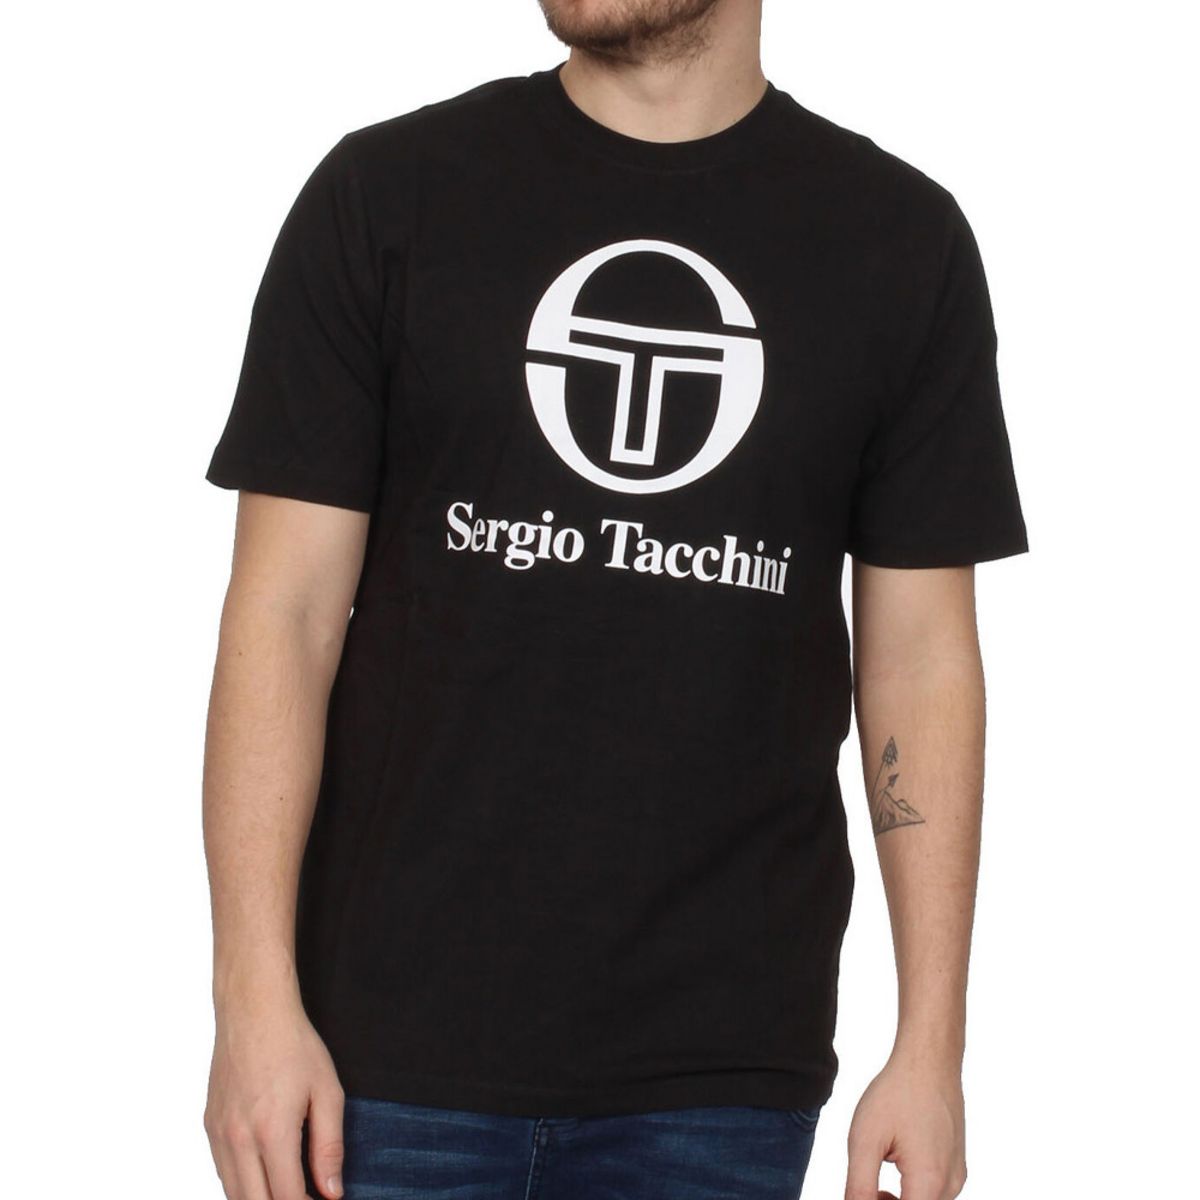 SERGIO TACCHINI T-shirt Noir Homme Sergio Tacchini Chiko